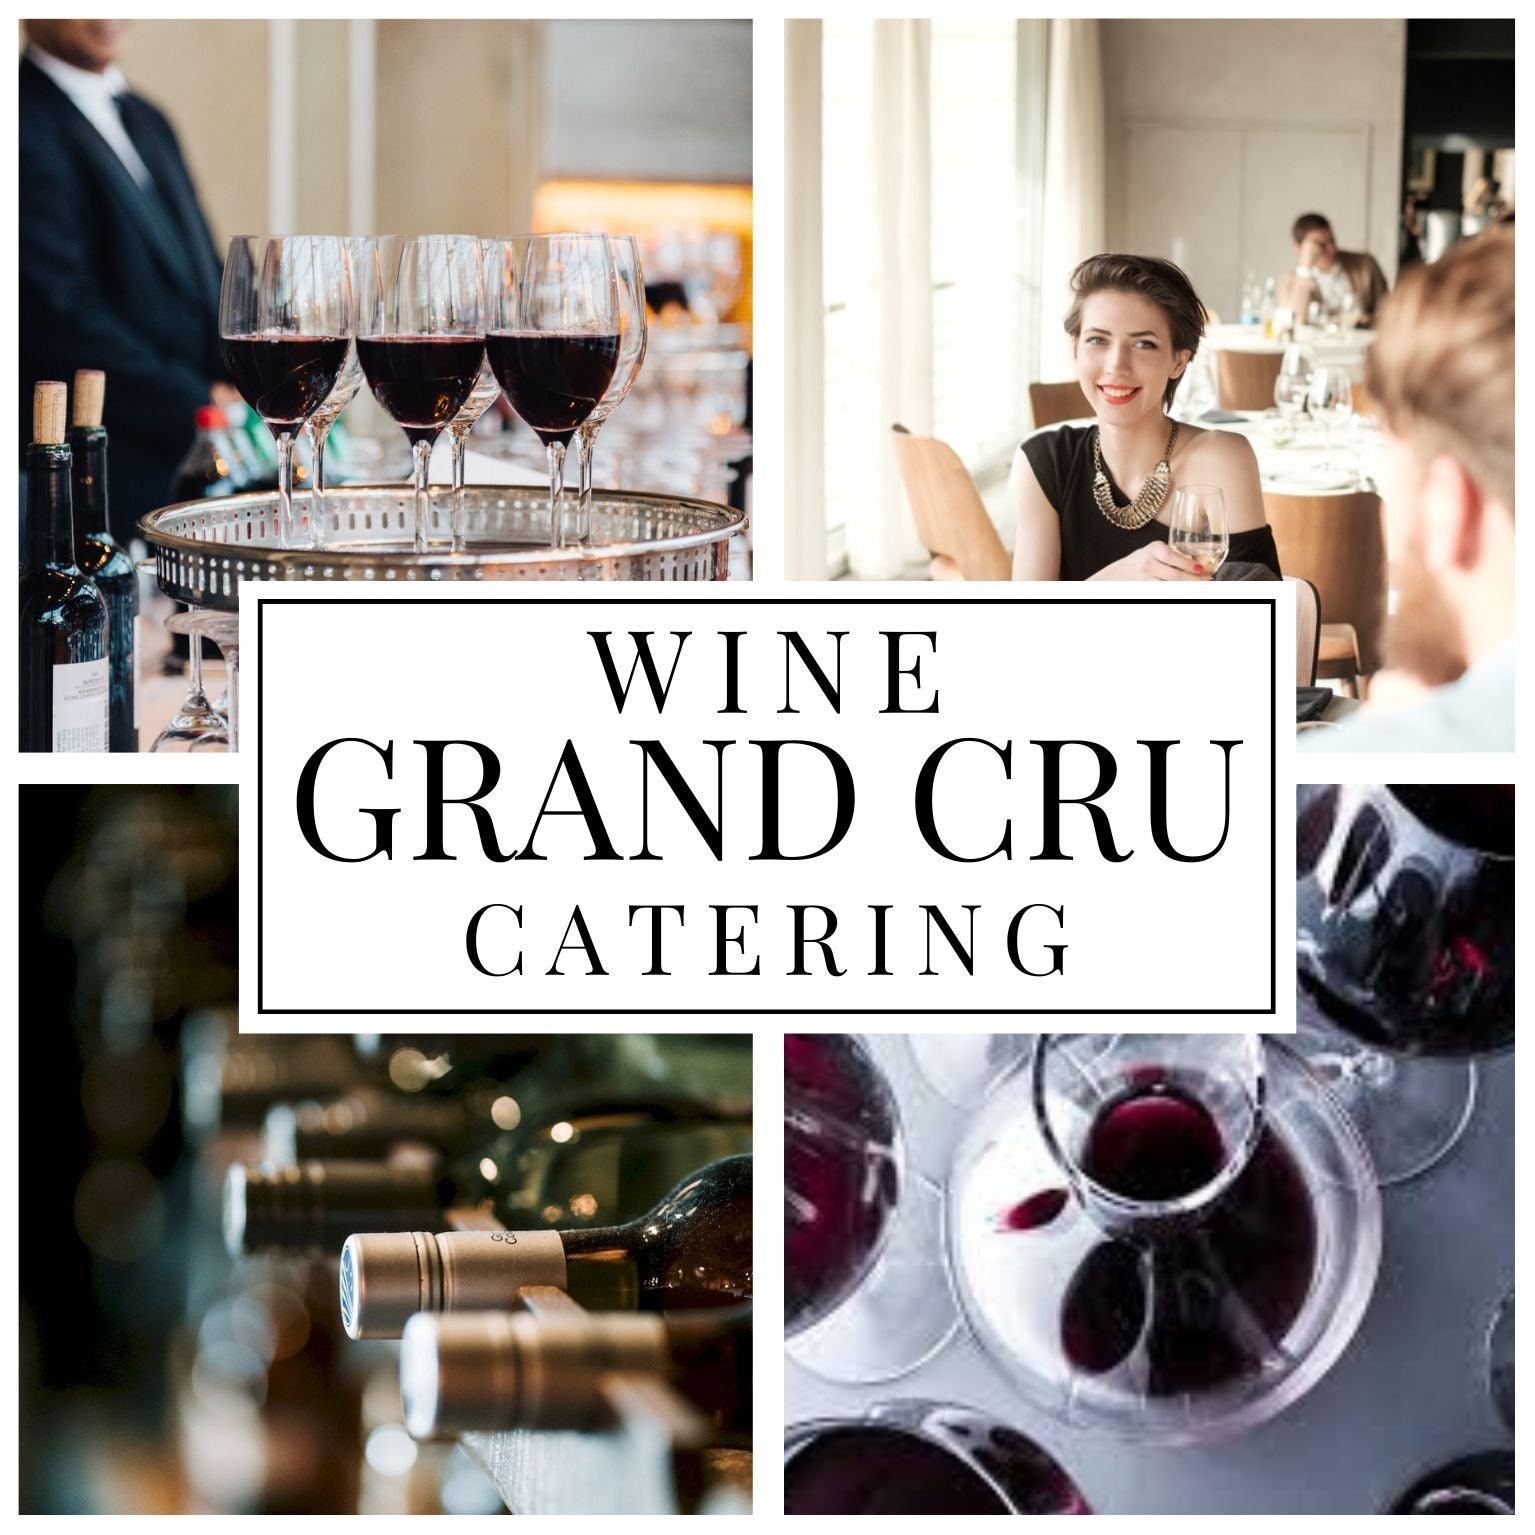 Grand Cru Wine Catering - Free Flow - Pop Up Wine